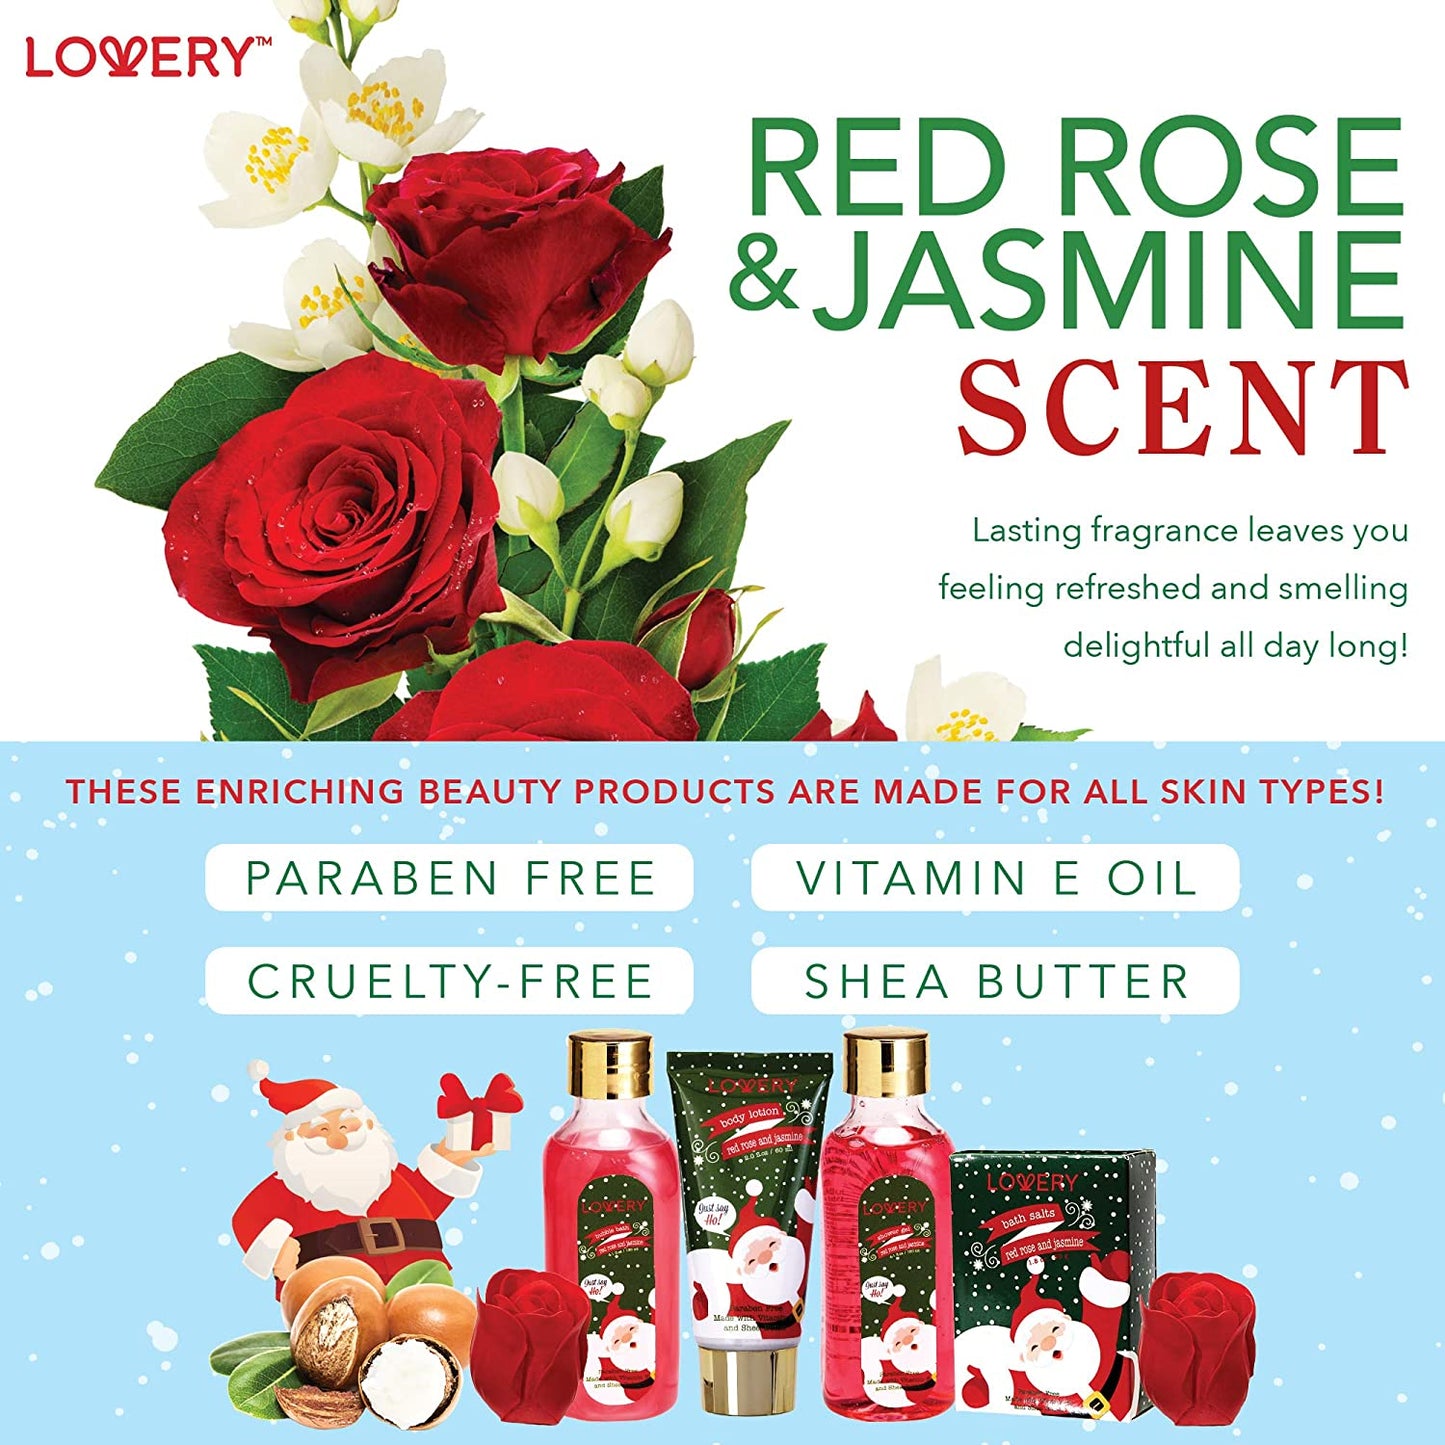 Red Rose and Jasmine Home Bath Set - 6Pc Christmas Gift